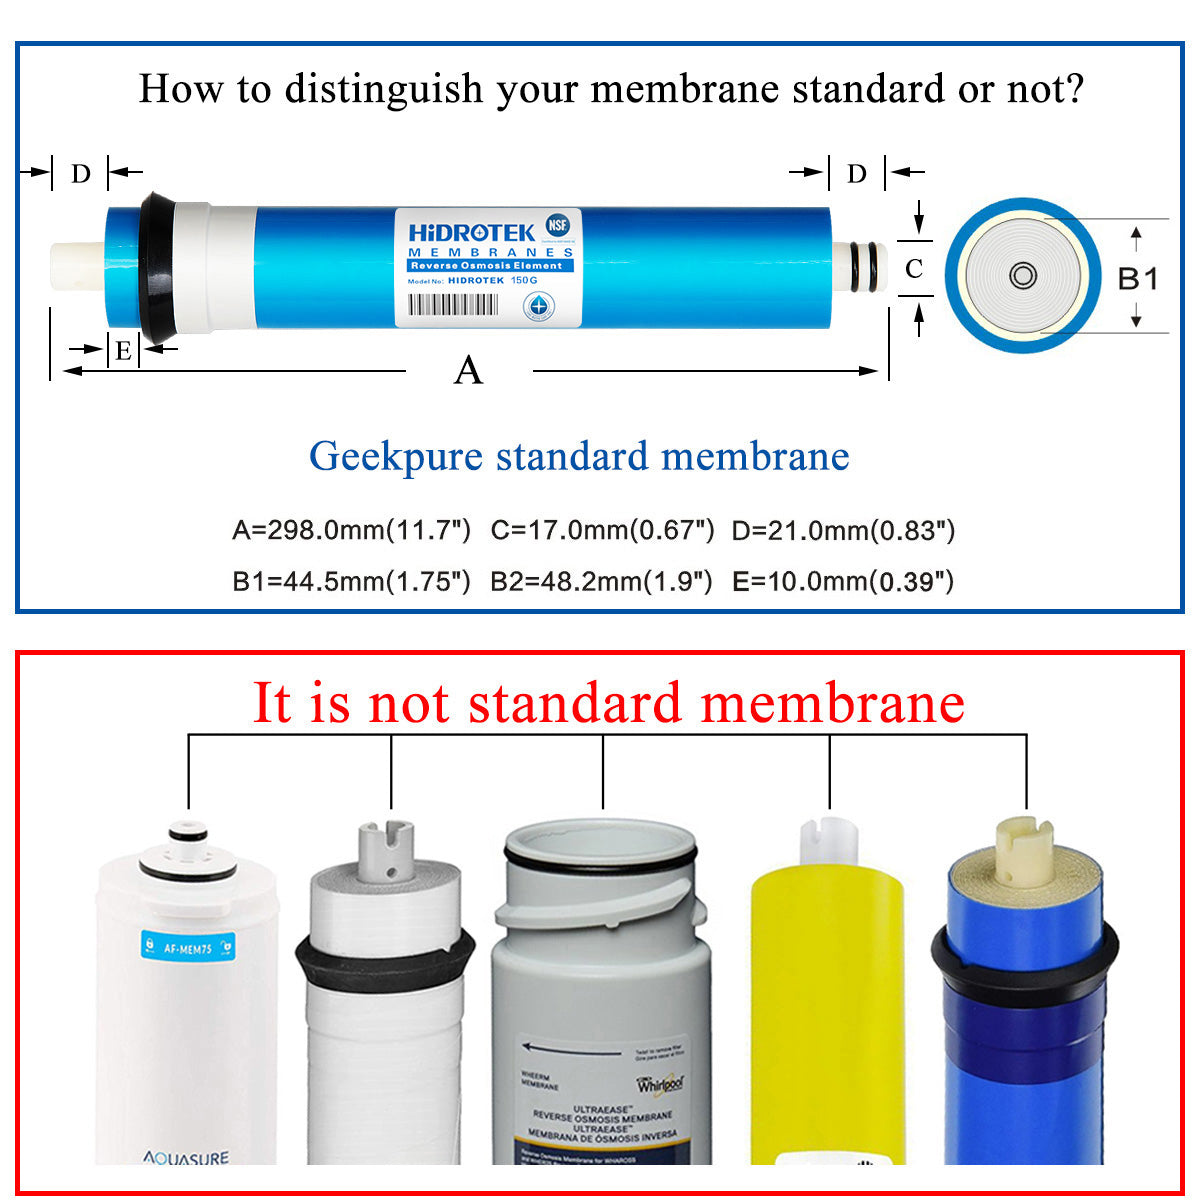 75 GPD Reverse Osmosis Membrane-NSF certificated -Pack of 2